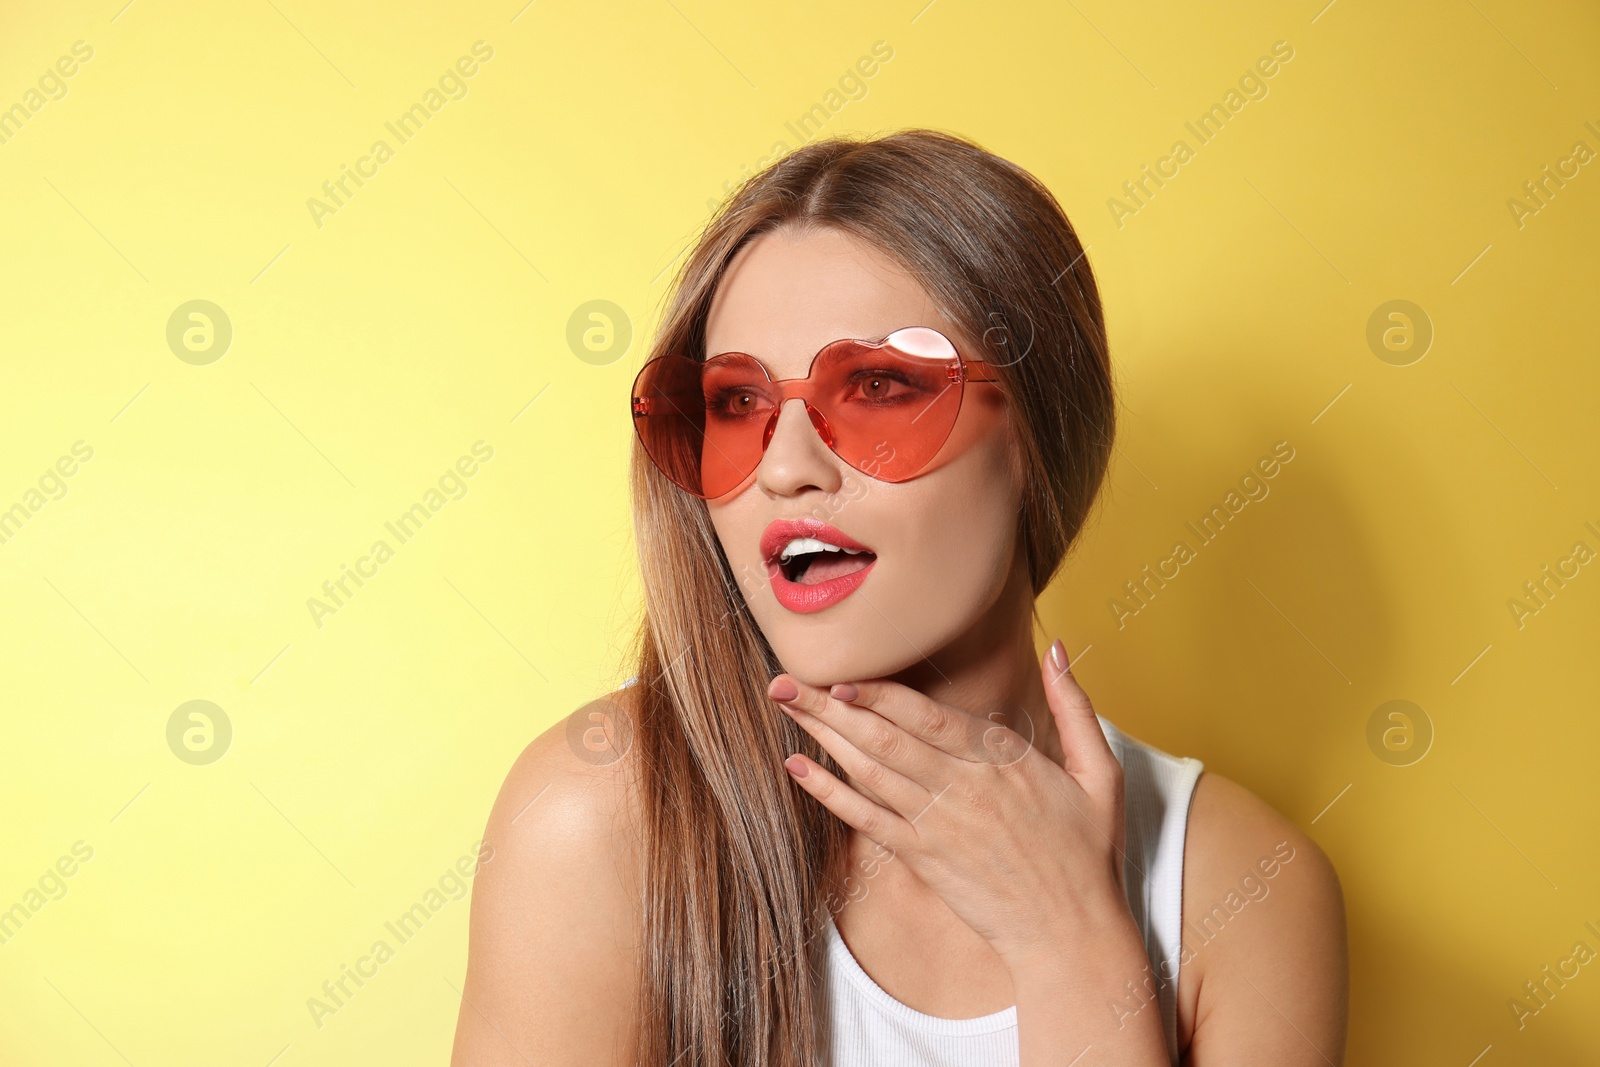 Photo of Young woman wearing stylish heart shaped sunglasses on yellow background